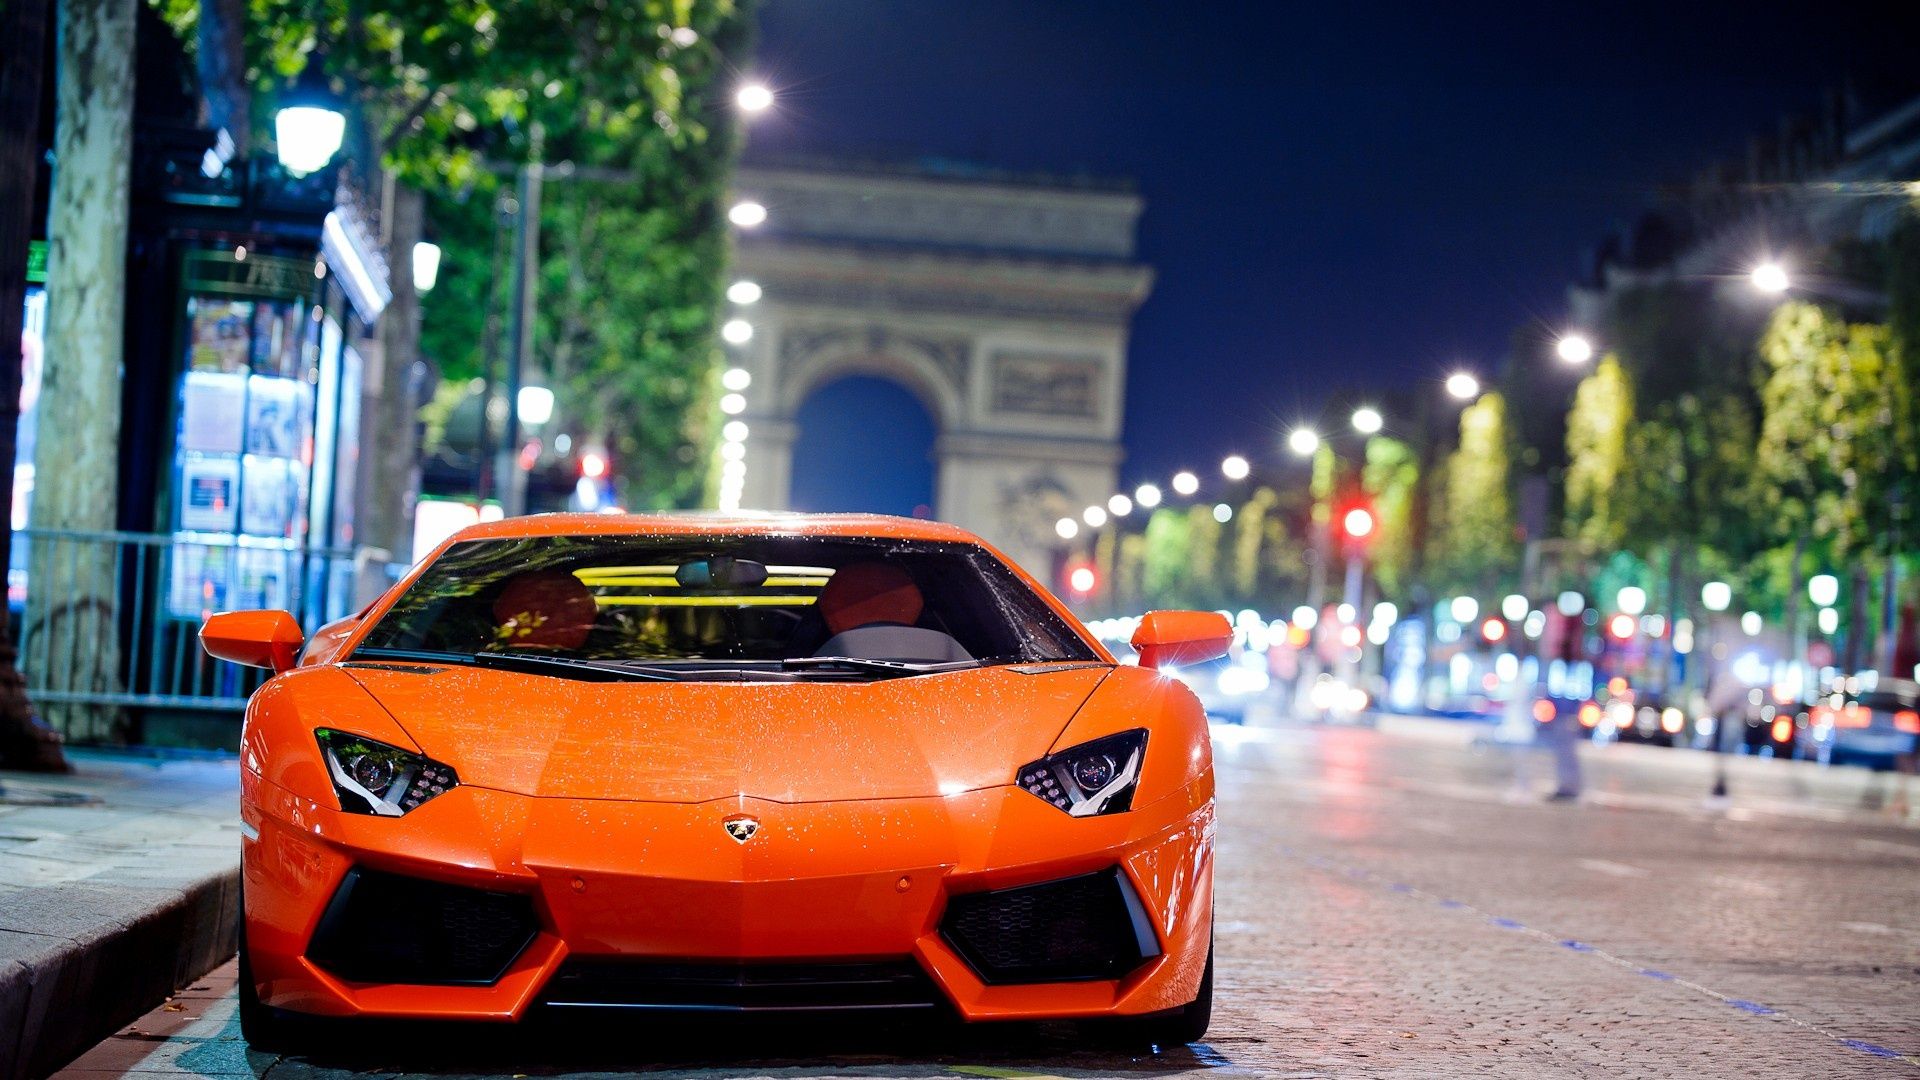 Lamborghini Aventador Night Shot .all Free Download.com